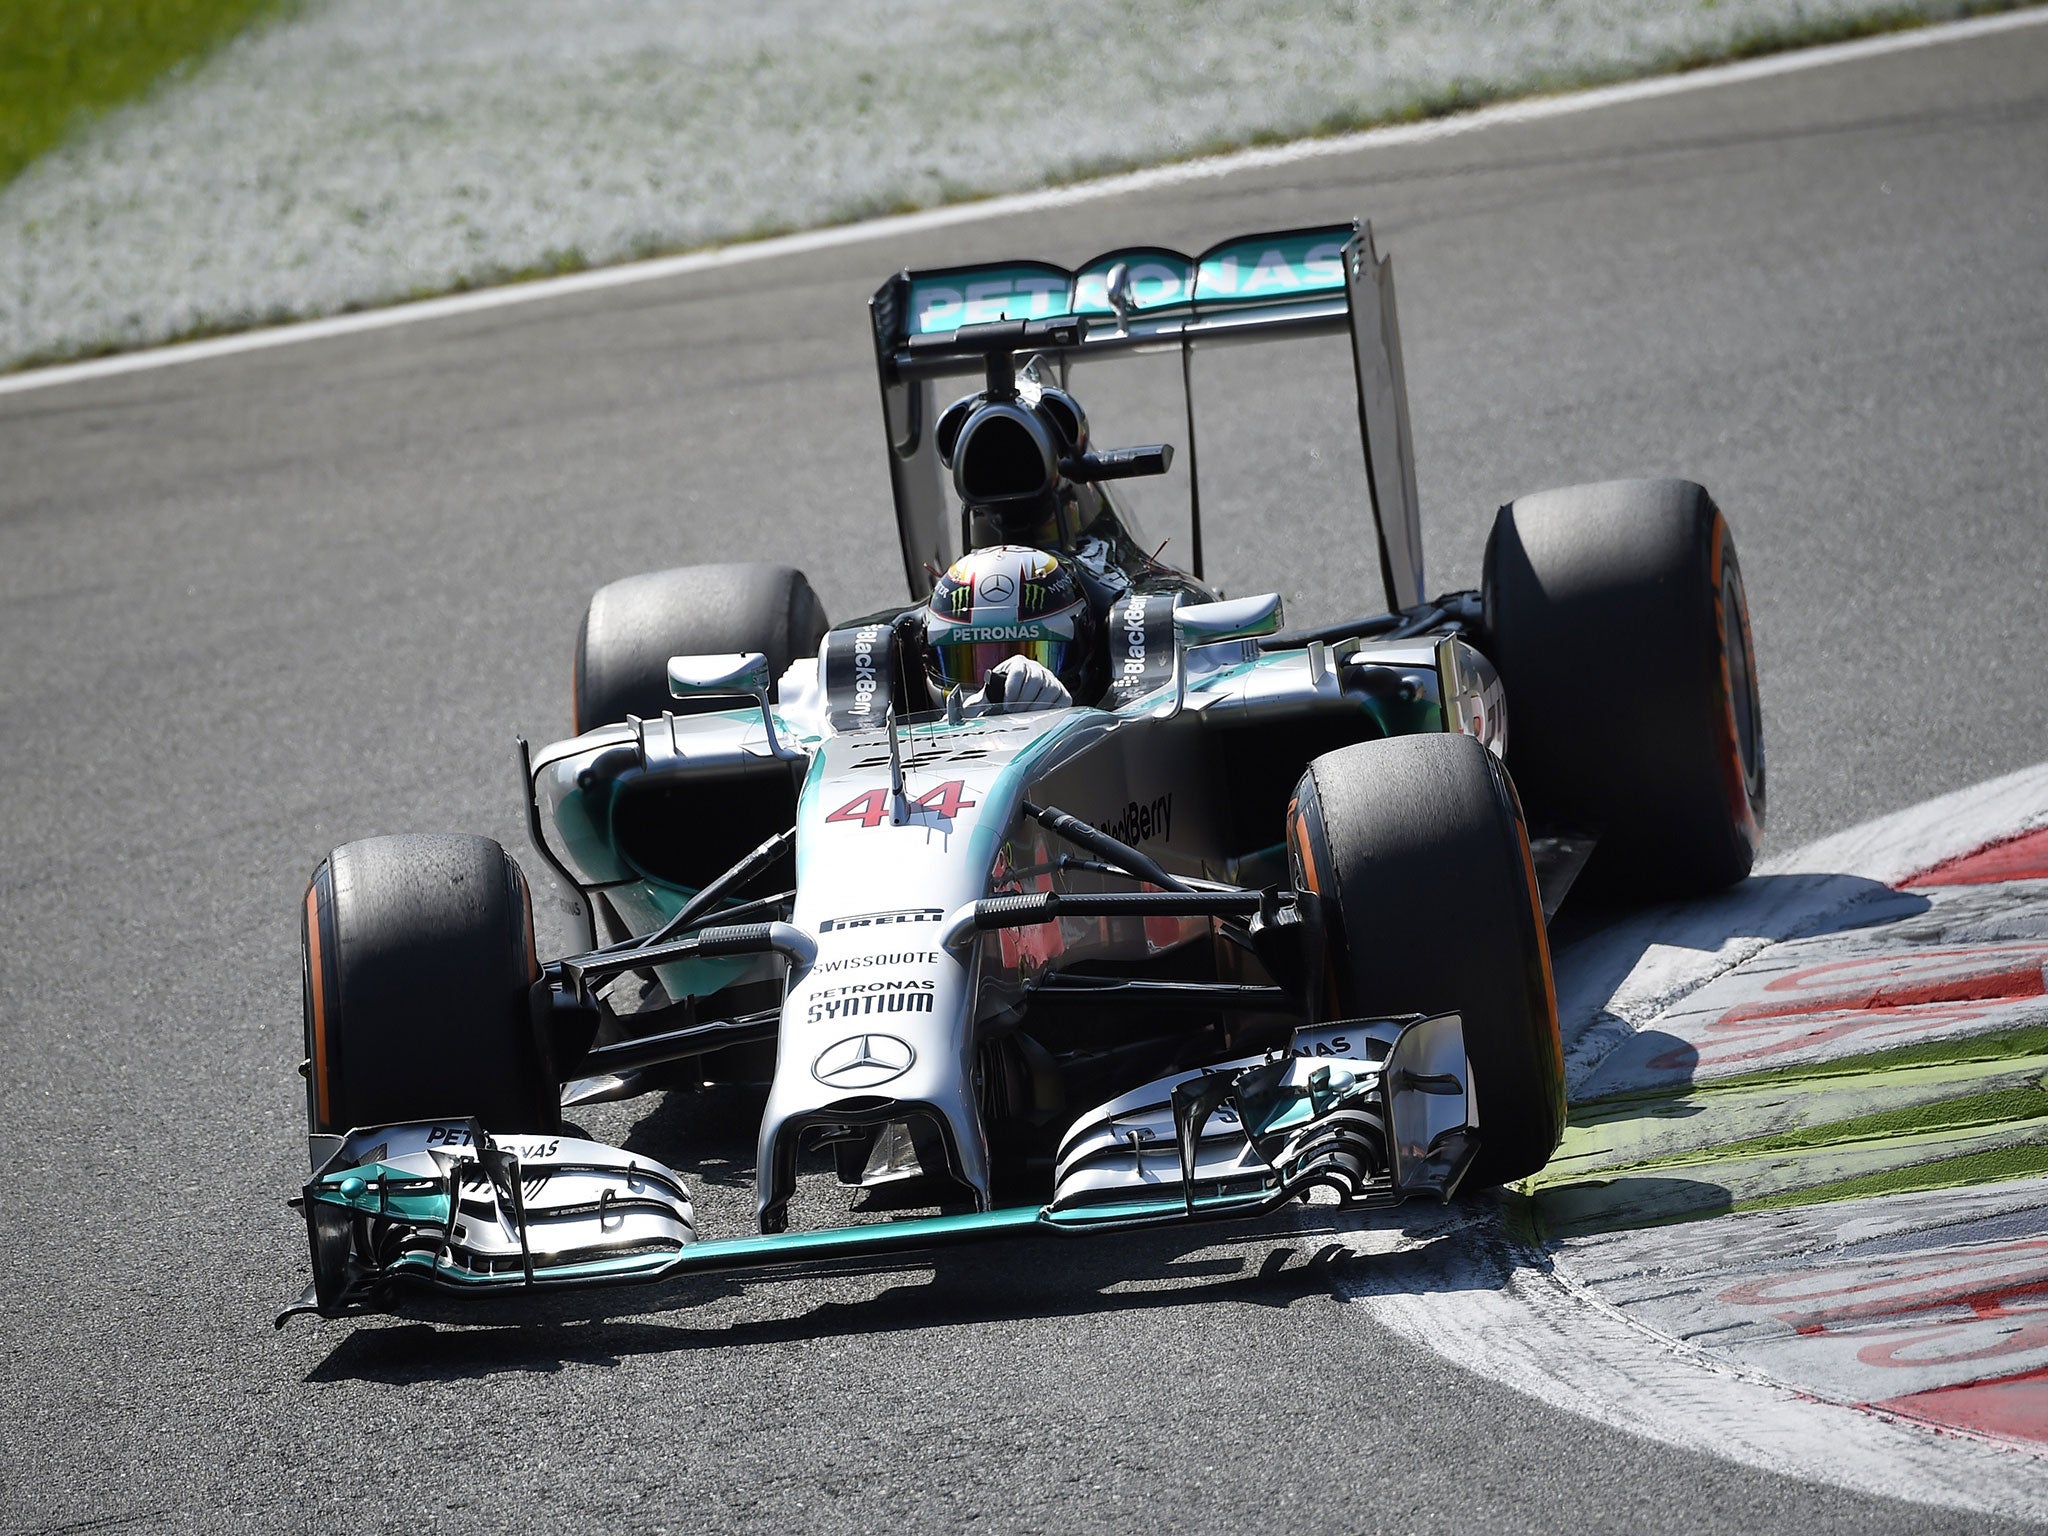 Lewis Hamilton secured pole position for the Italian Grand Prix